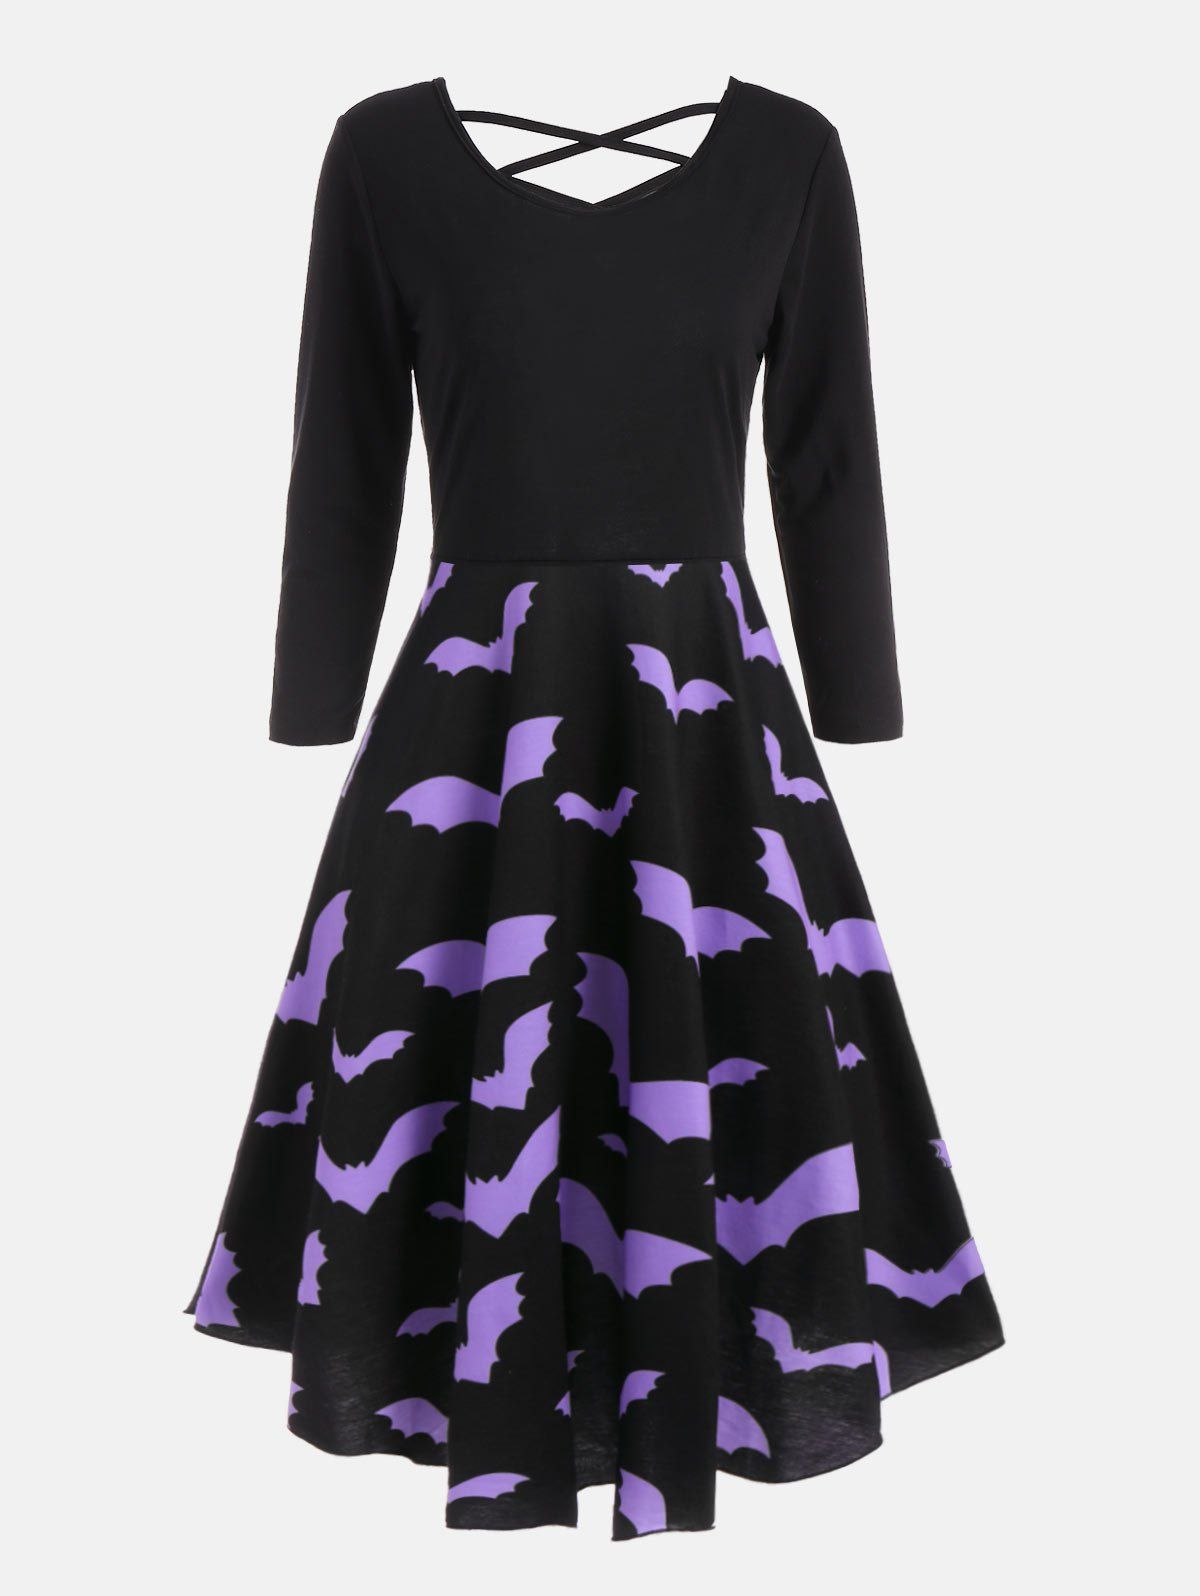 Cross Back Bat Print Fit and Flare Dress - BLACK 2XL